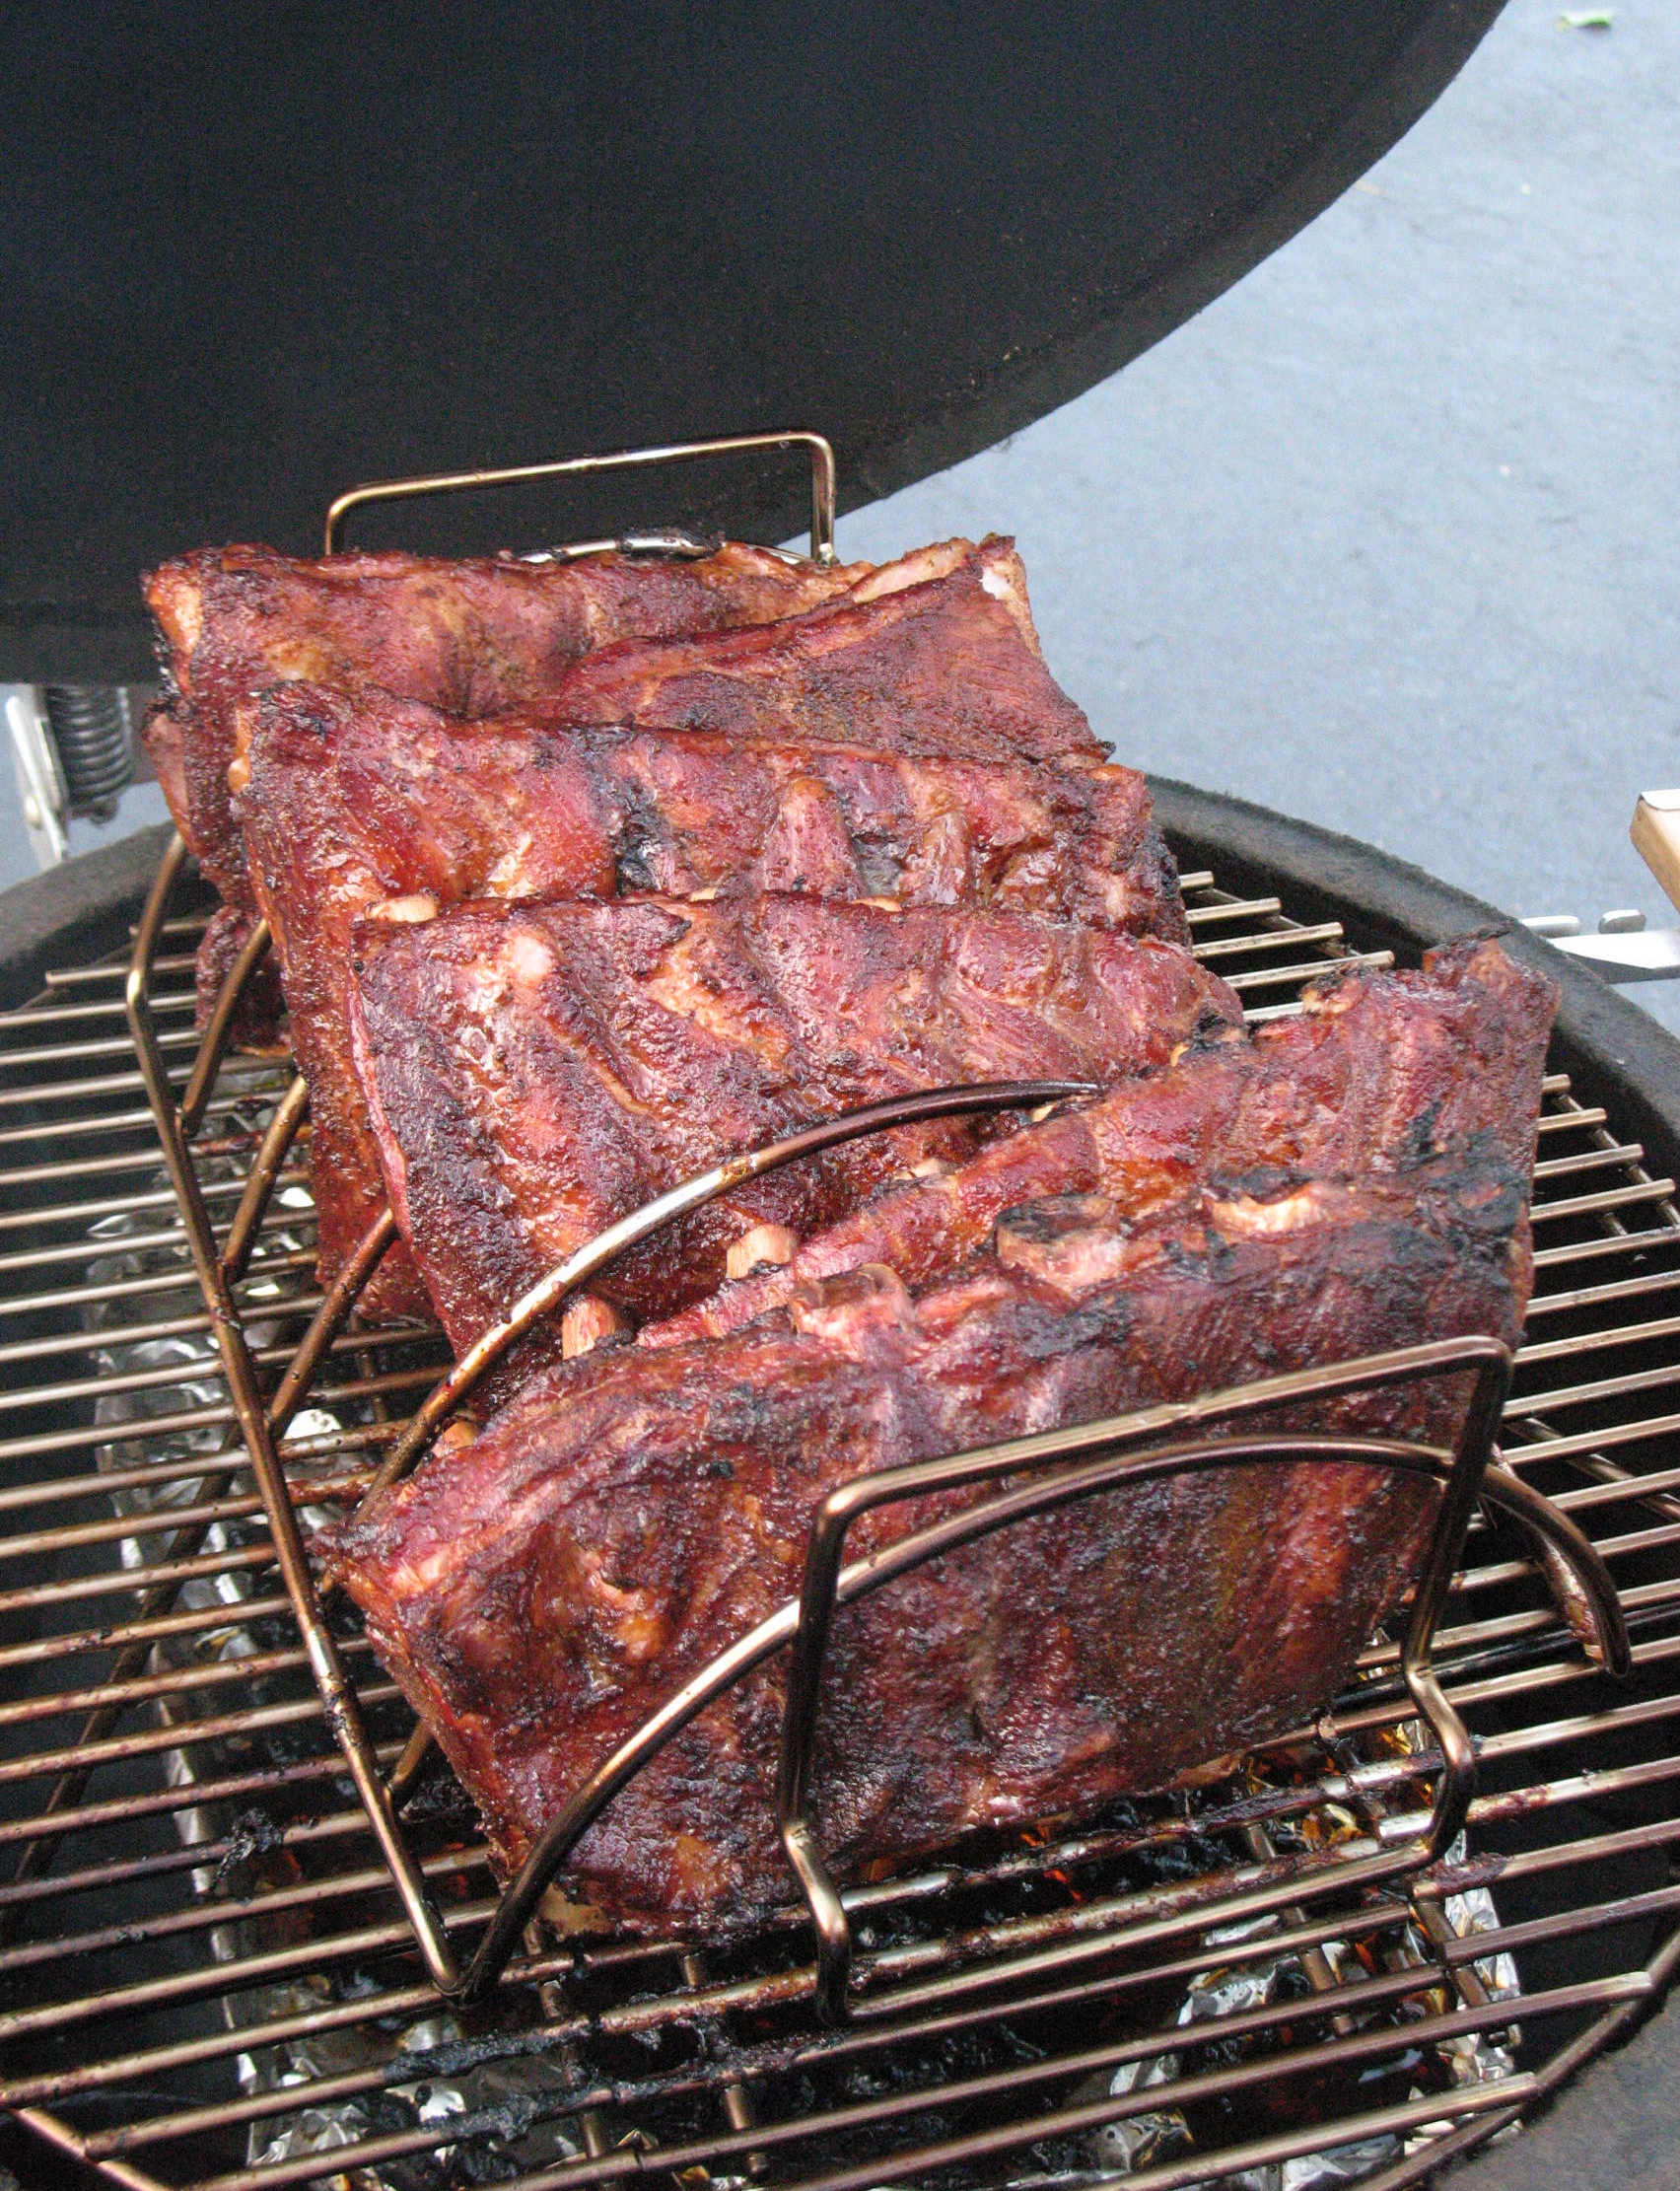 basted ribs on a saffire roasting rack